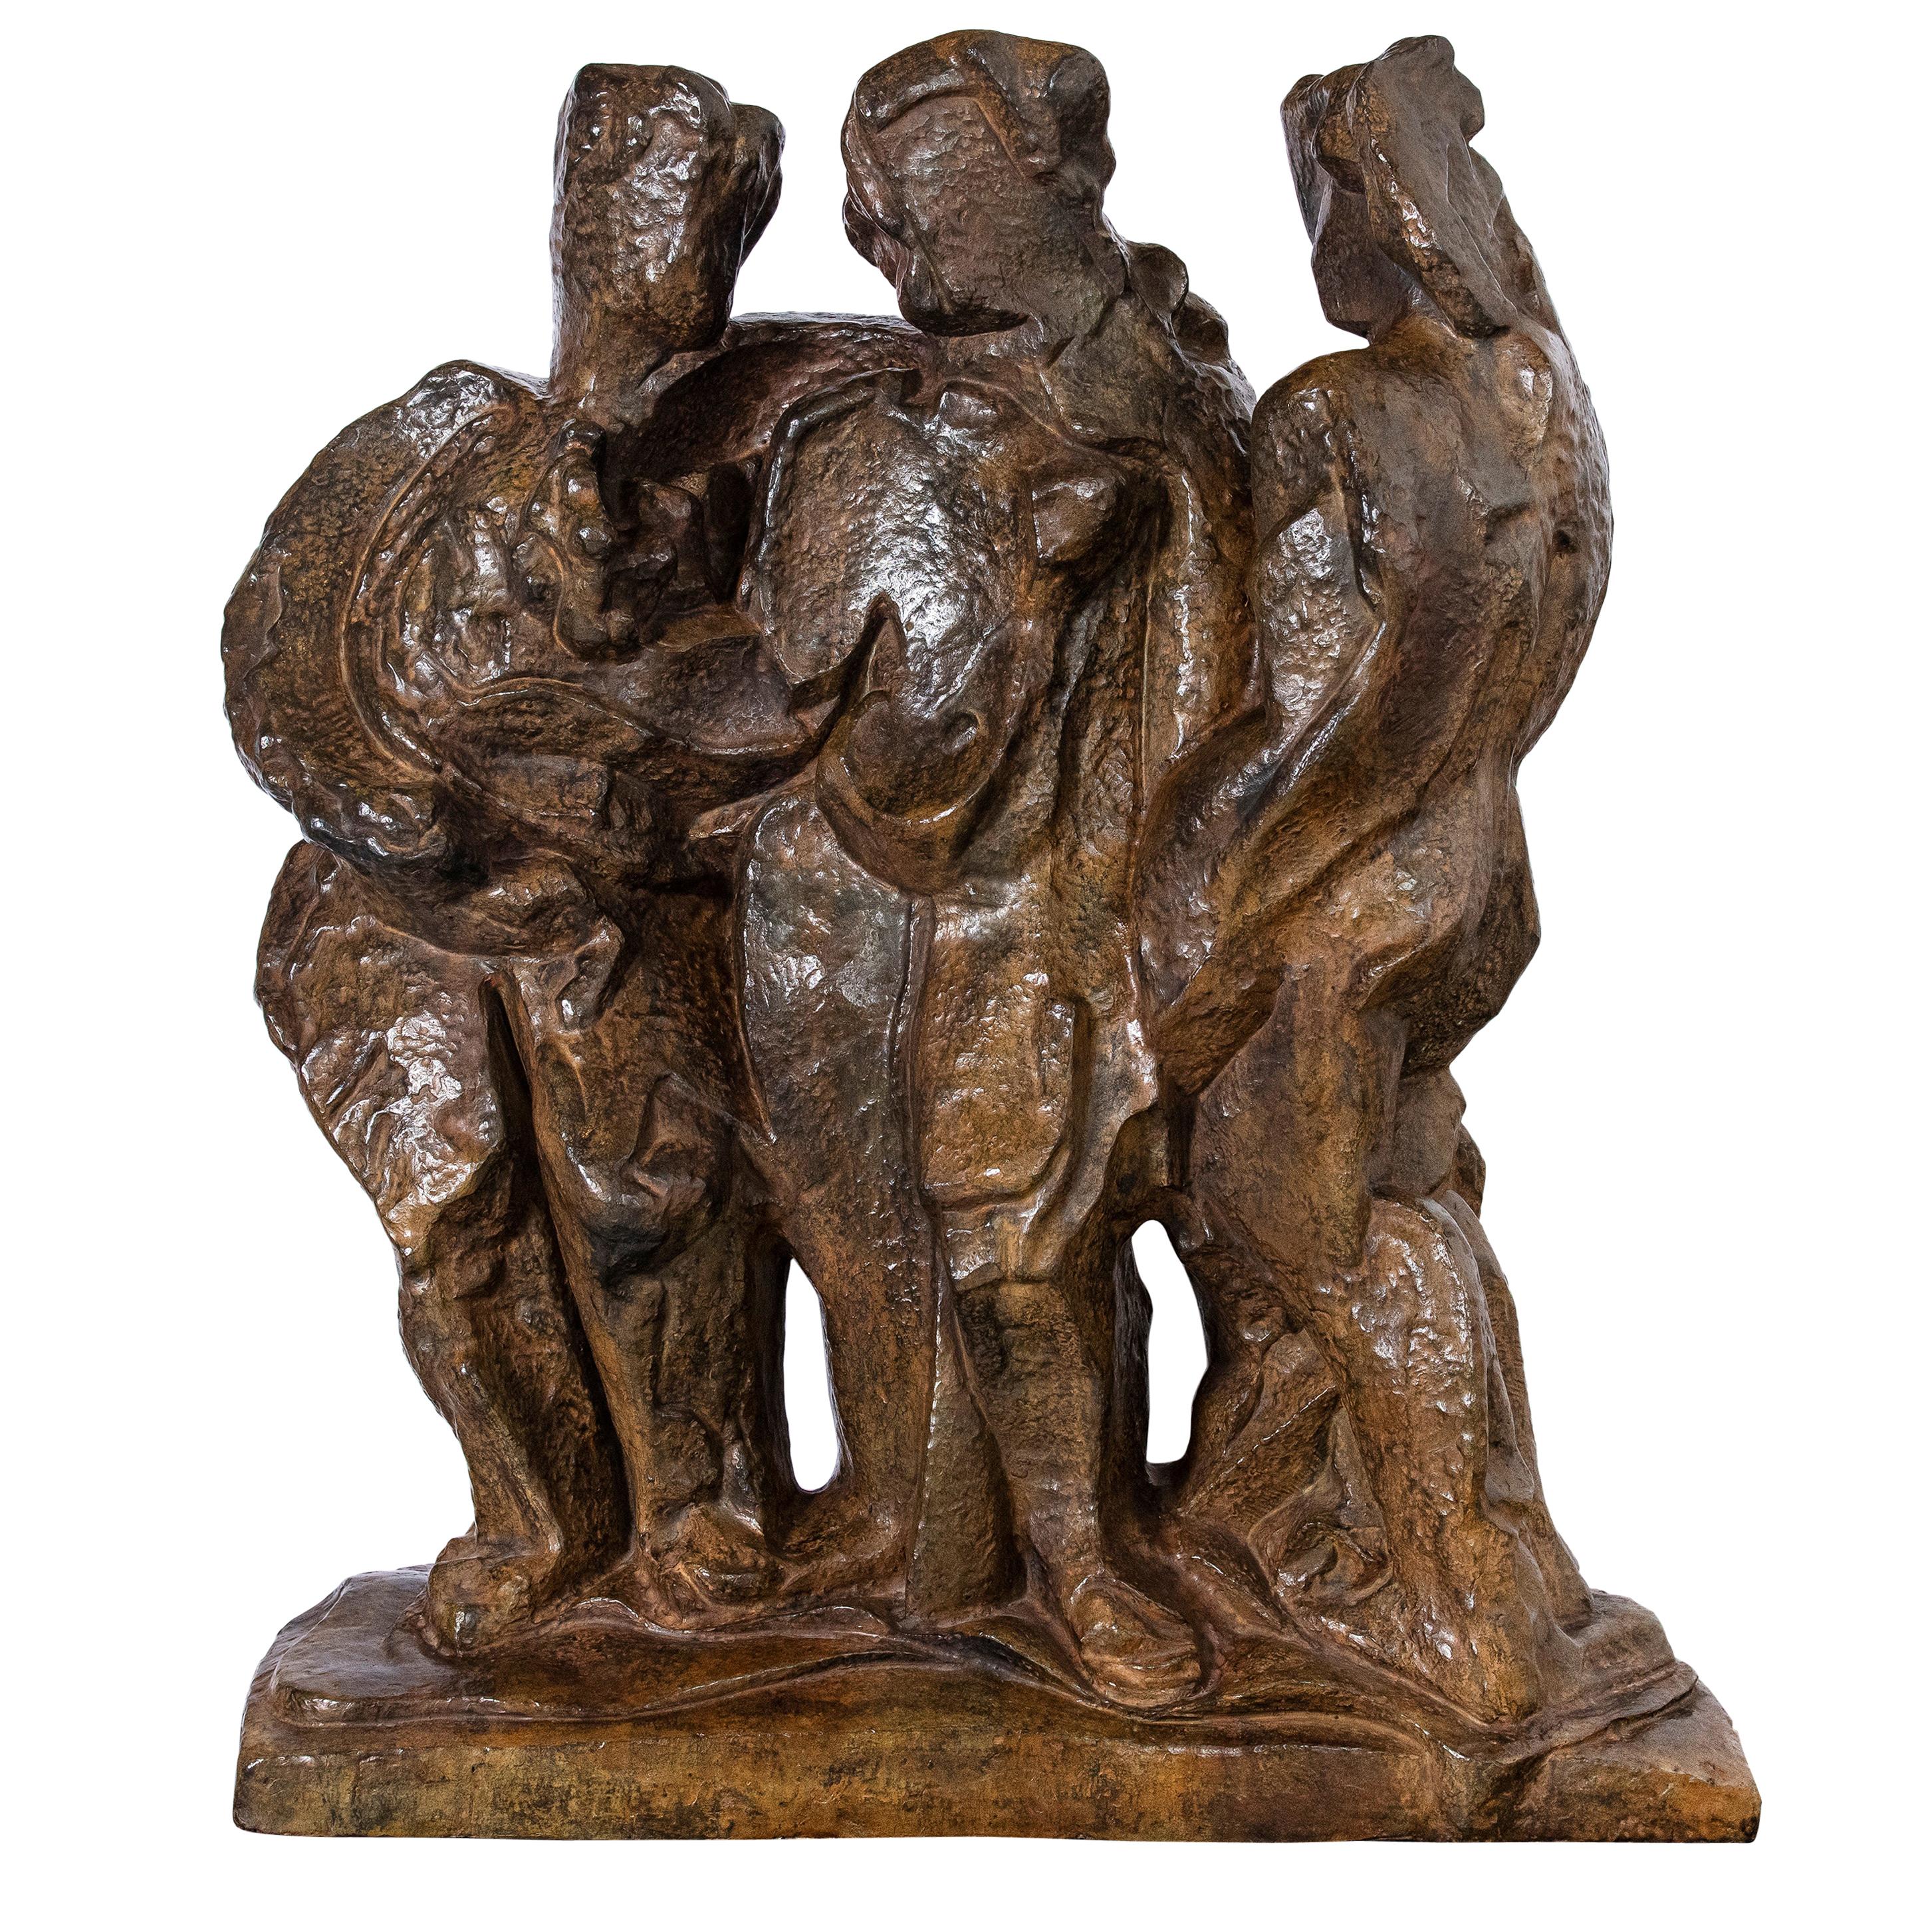 Pablo Curatella Manes Cast Bronze Sculpture, "Las tres gracias", Paris, 1930